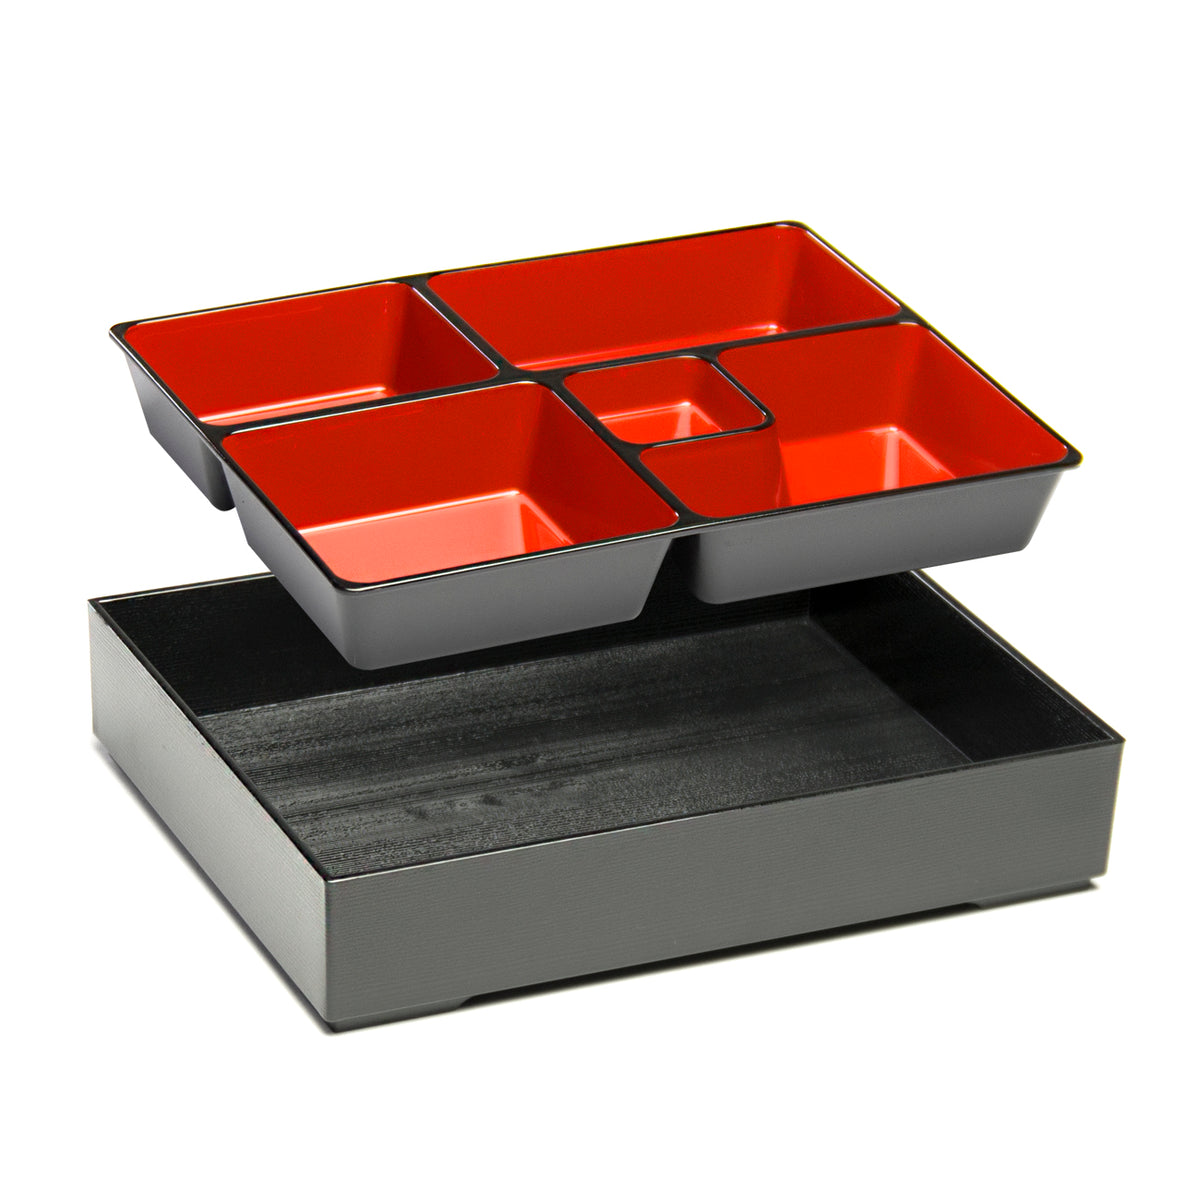 Restaurantware Bento Tek 41 oz Wood Grain & Black Buddha Box All-in-One Lunch Box - with Utensils, Sauce Cup - 7 1/4 x 4 1/4 x 4 - 1 Count Box